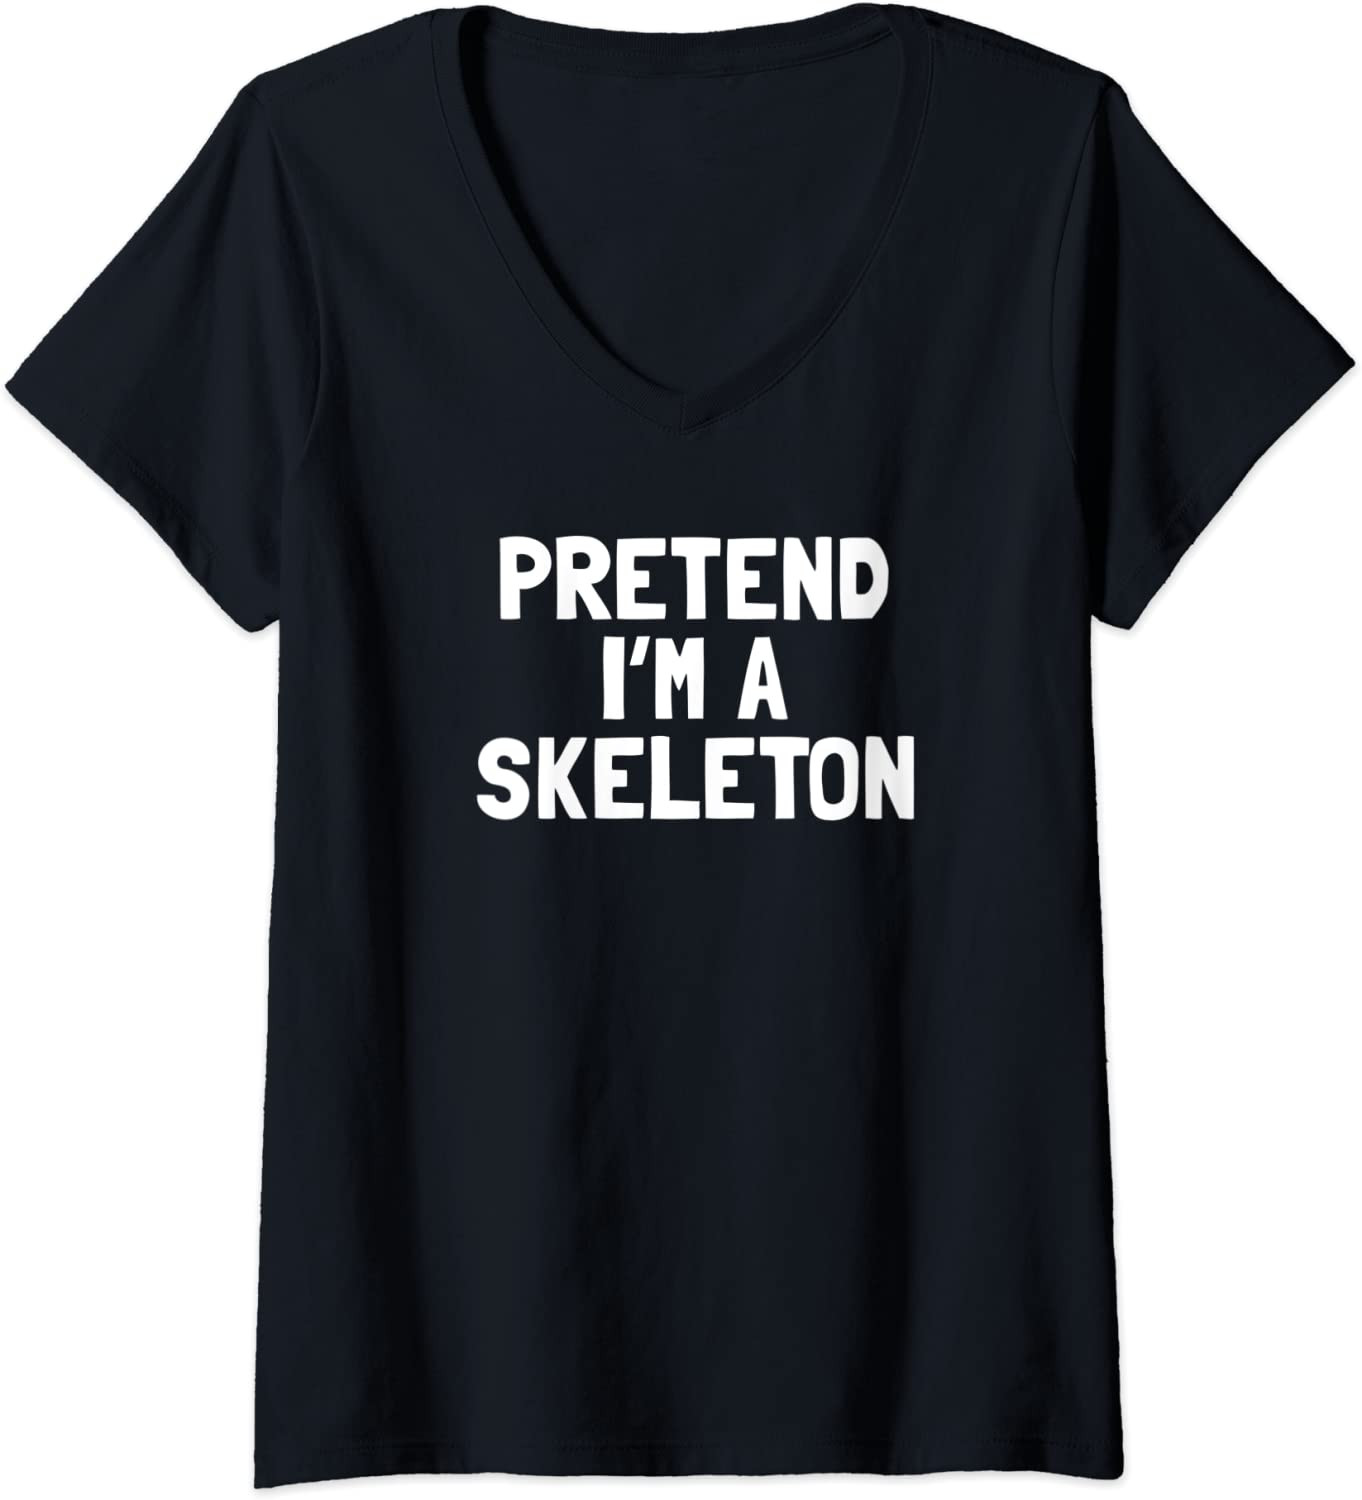 Pretend I'm A Skeleton Halloween Costume T-Shirt